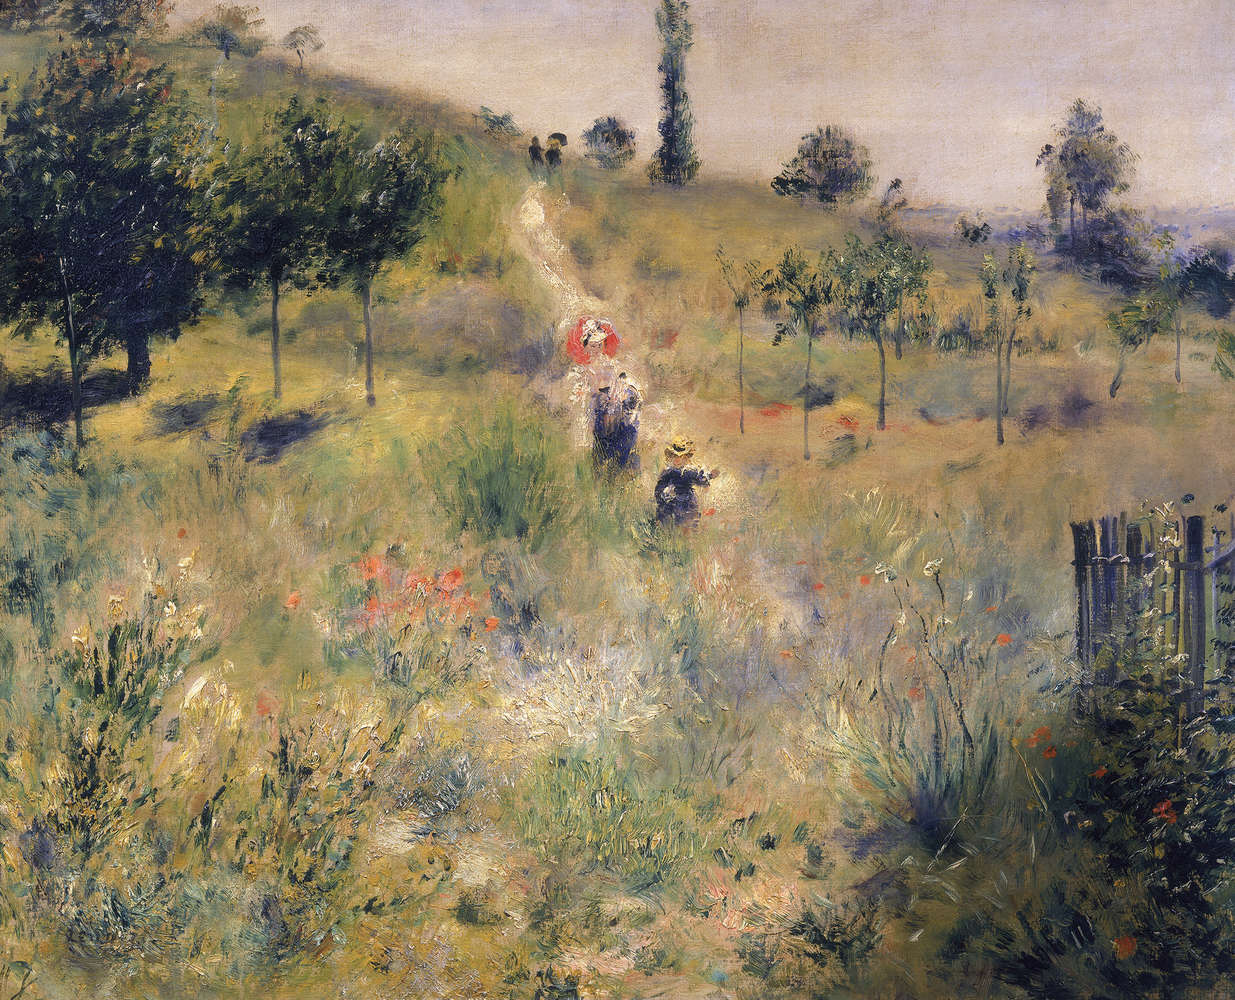             Photo wallpaper "Rising path through high grassum" by Pierre Auguste Renoir
        